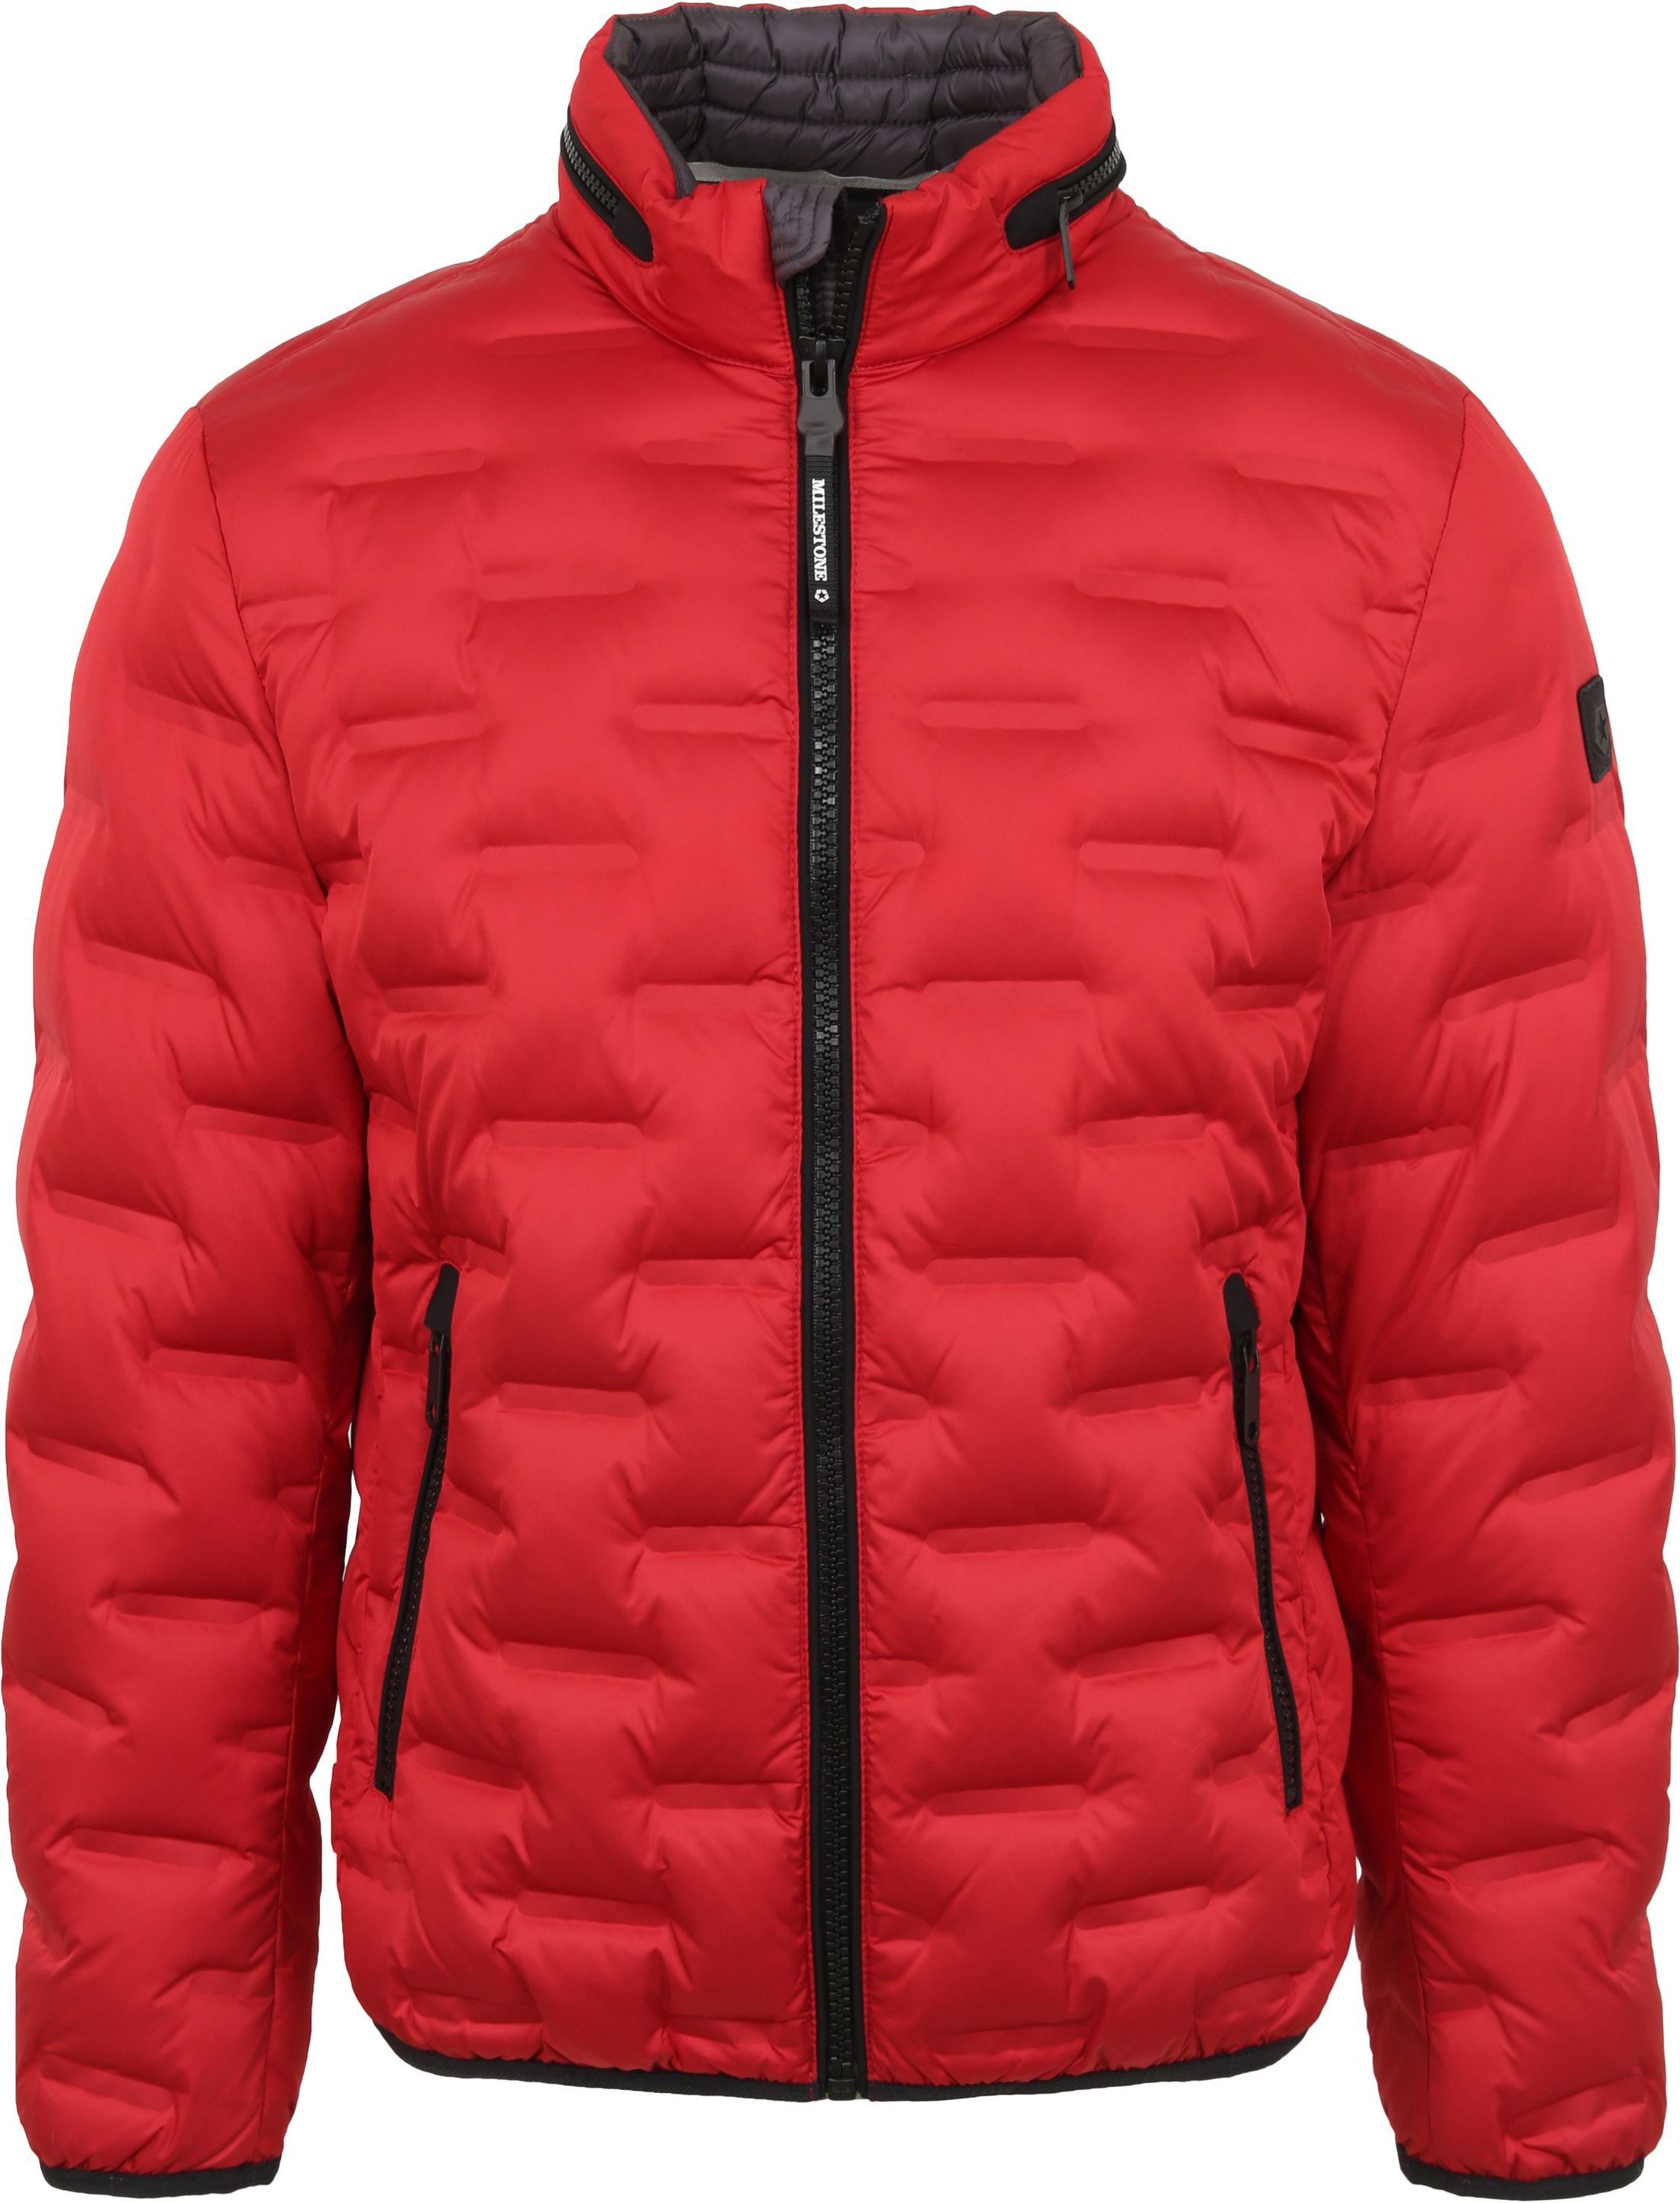 Milestone Salvio Jacket Red size 42-R